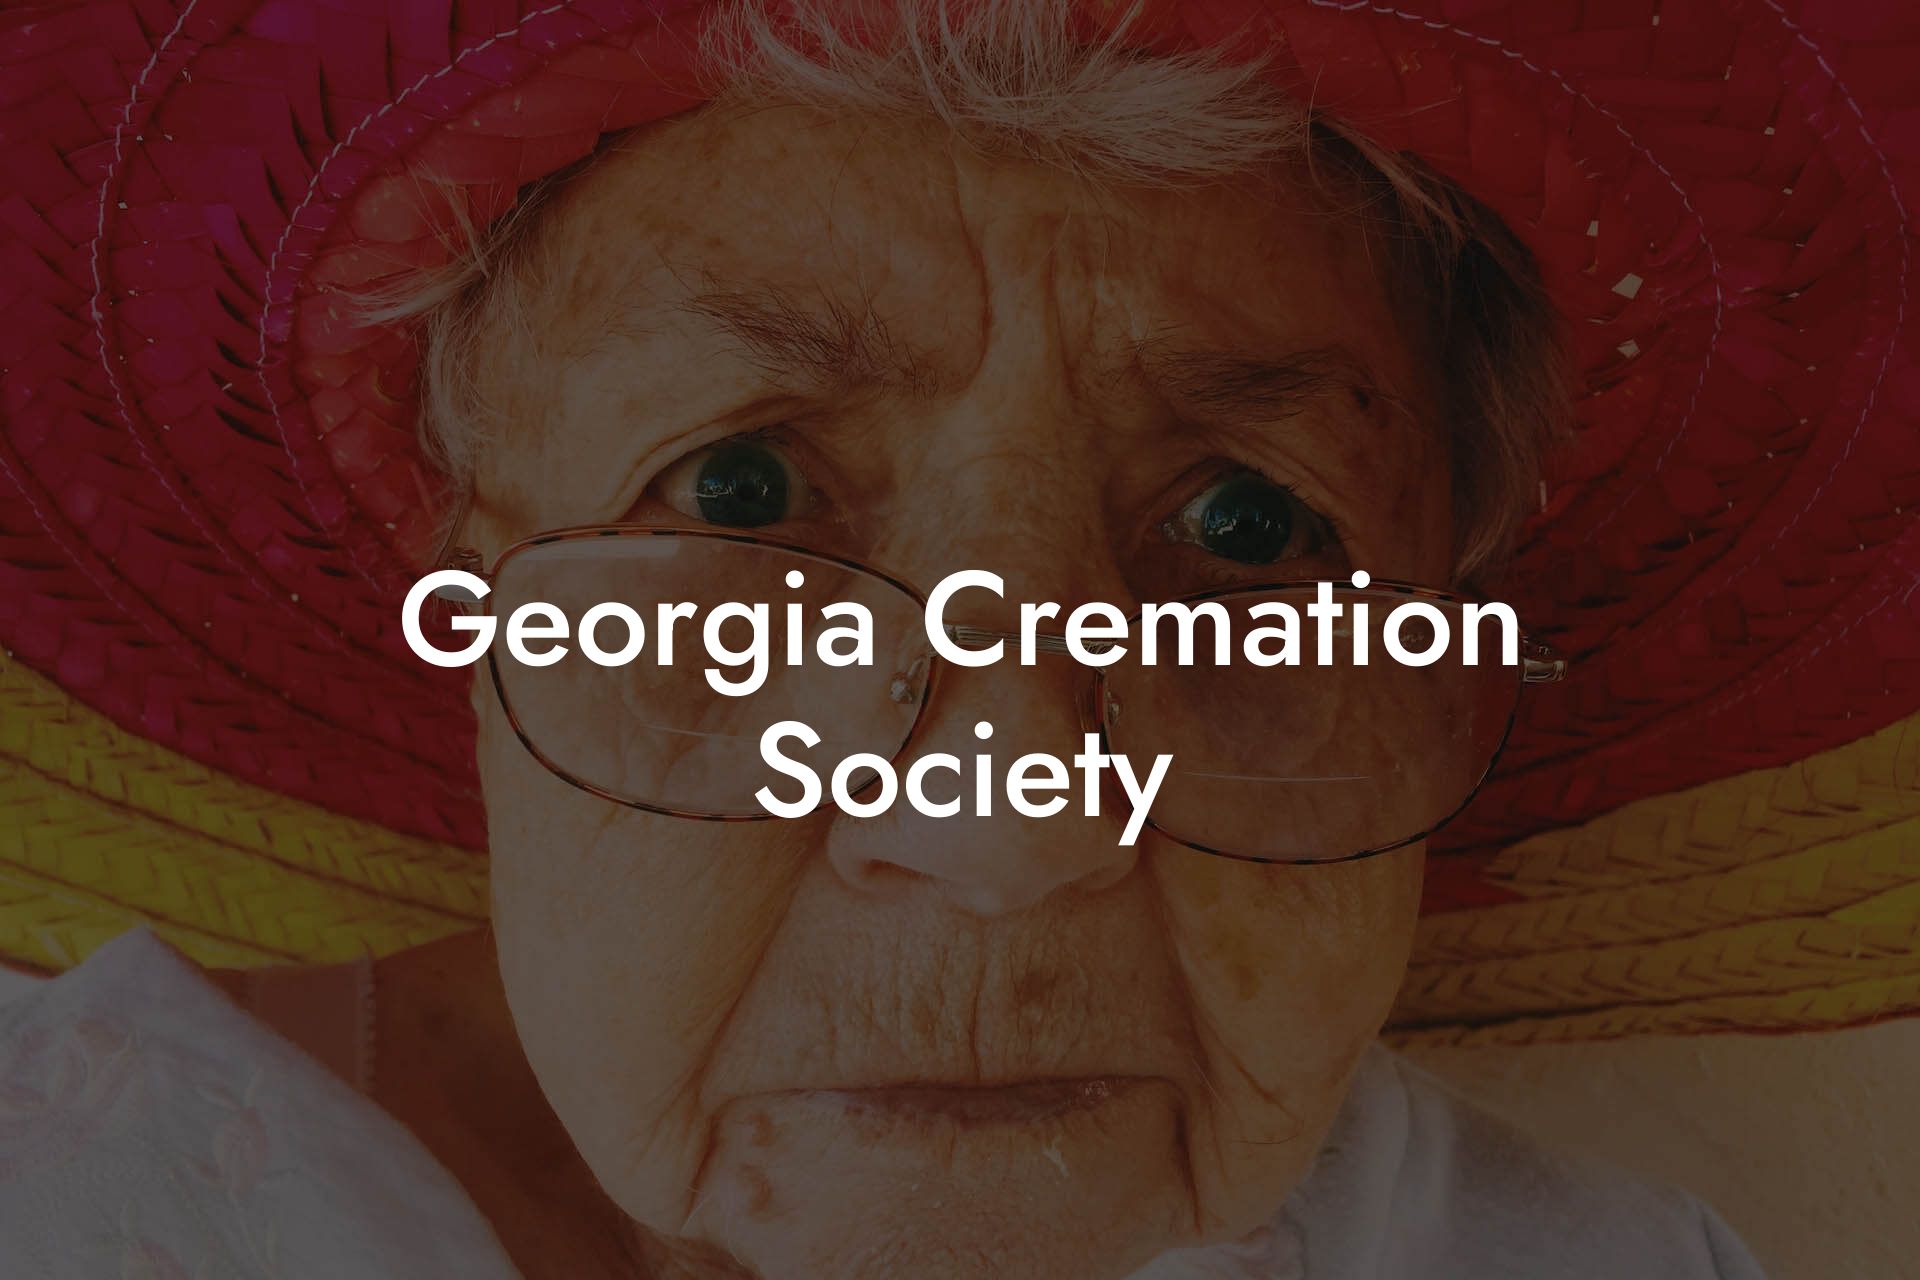 Georgia Cremation Society